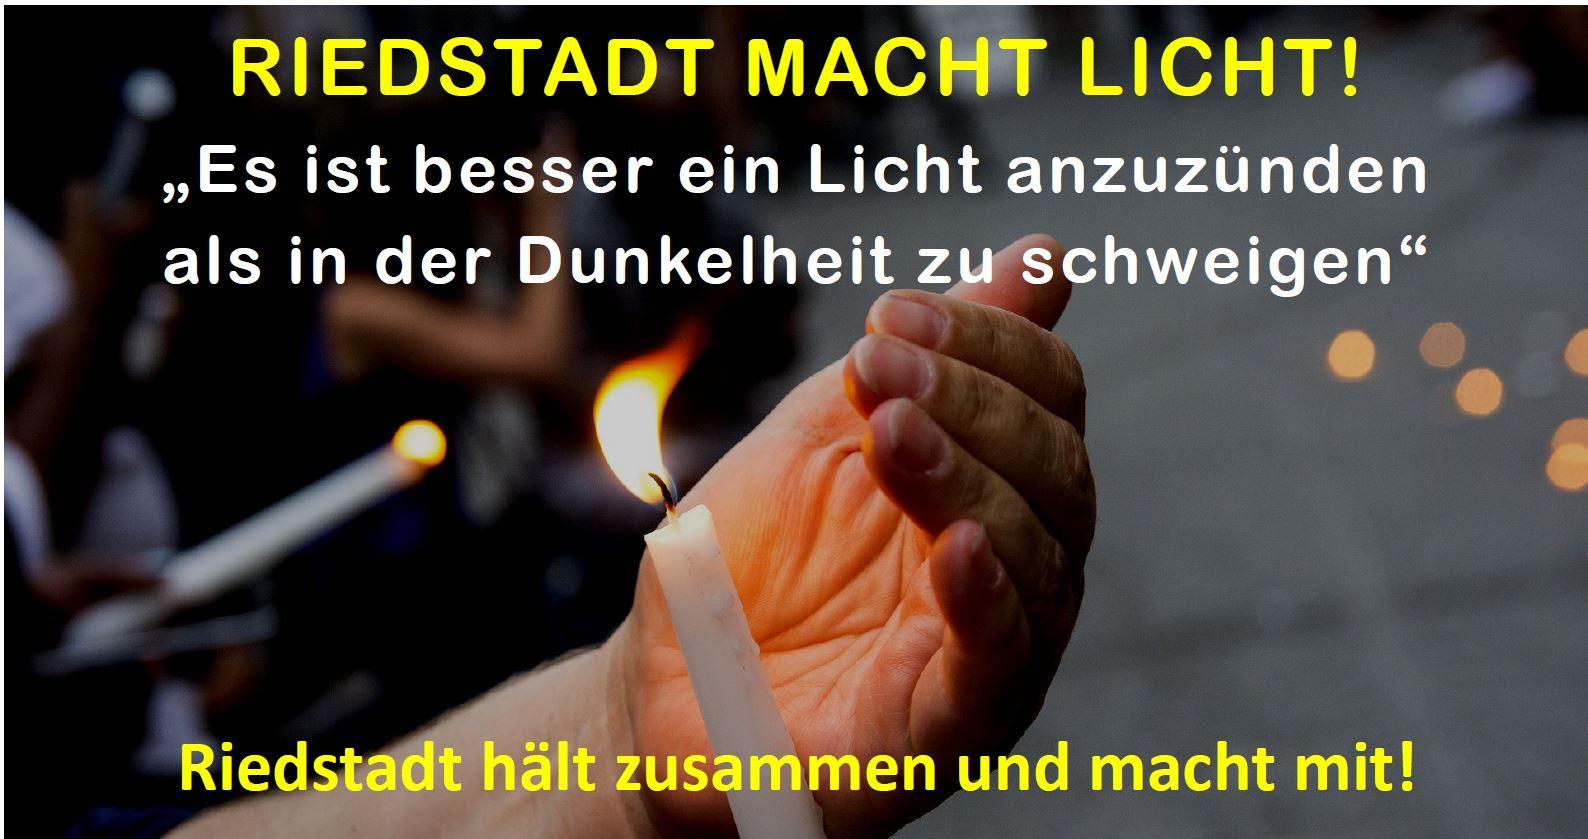 Riedstadt Macht Licht (c) pixabay.com